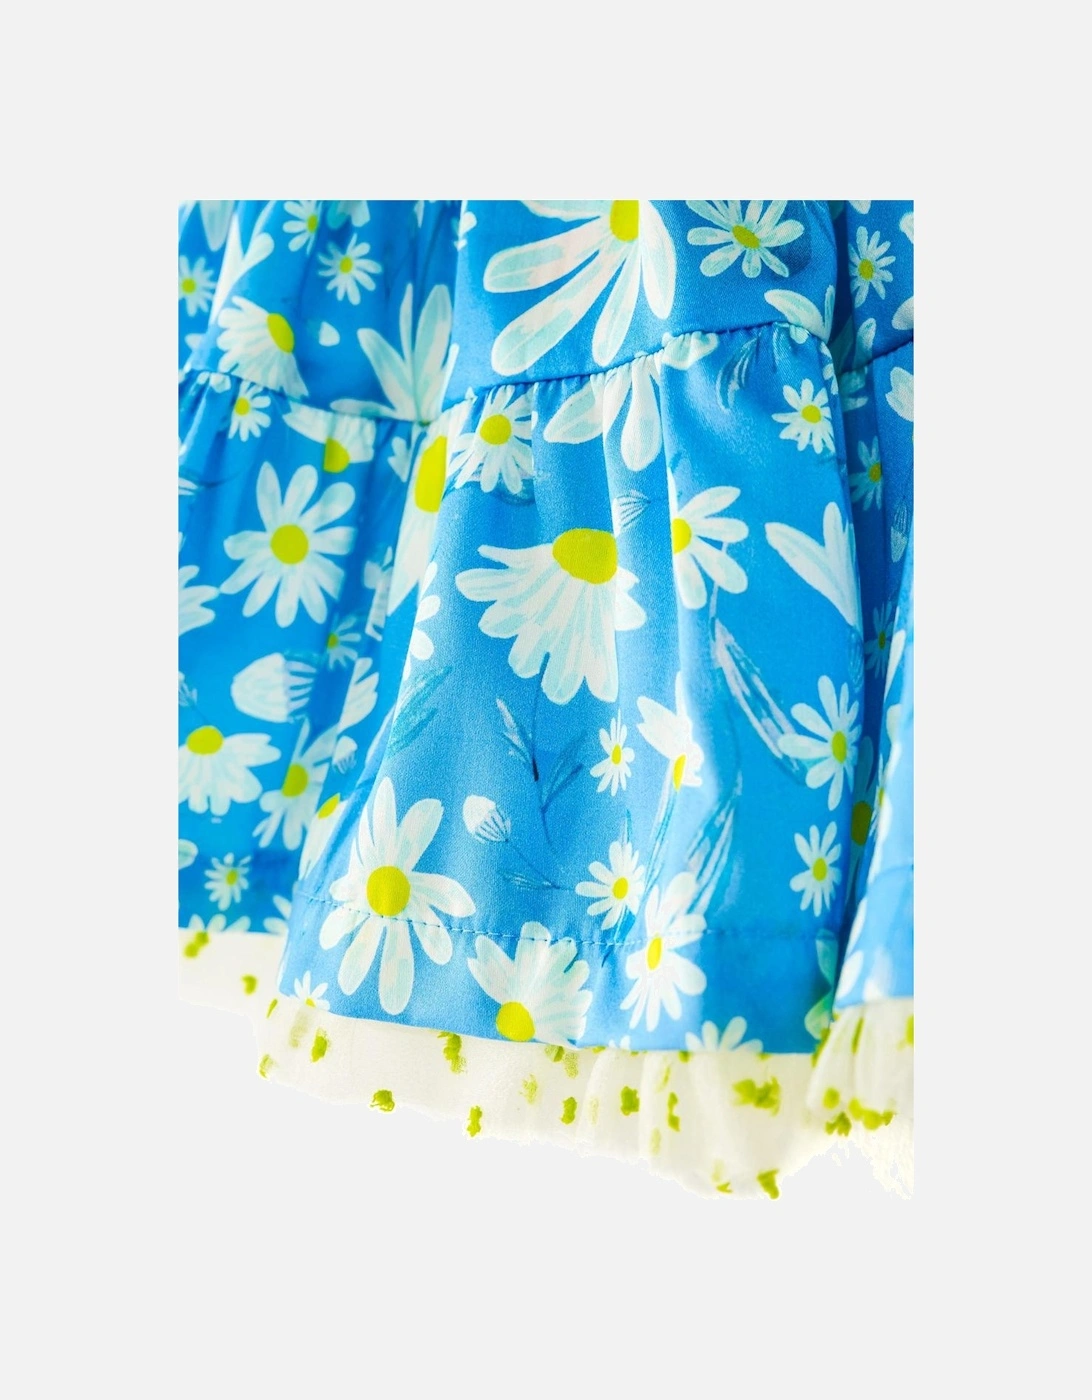 Blue Daisy 3 Piece Bomber Skirt Set